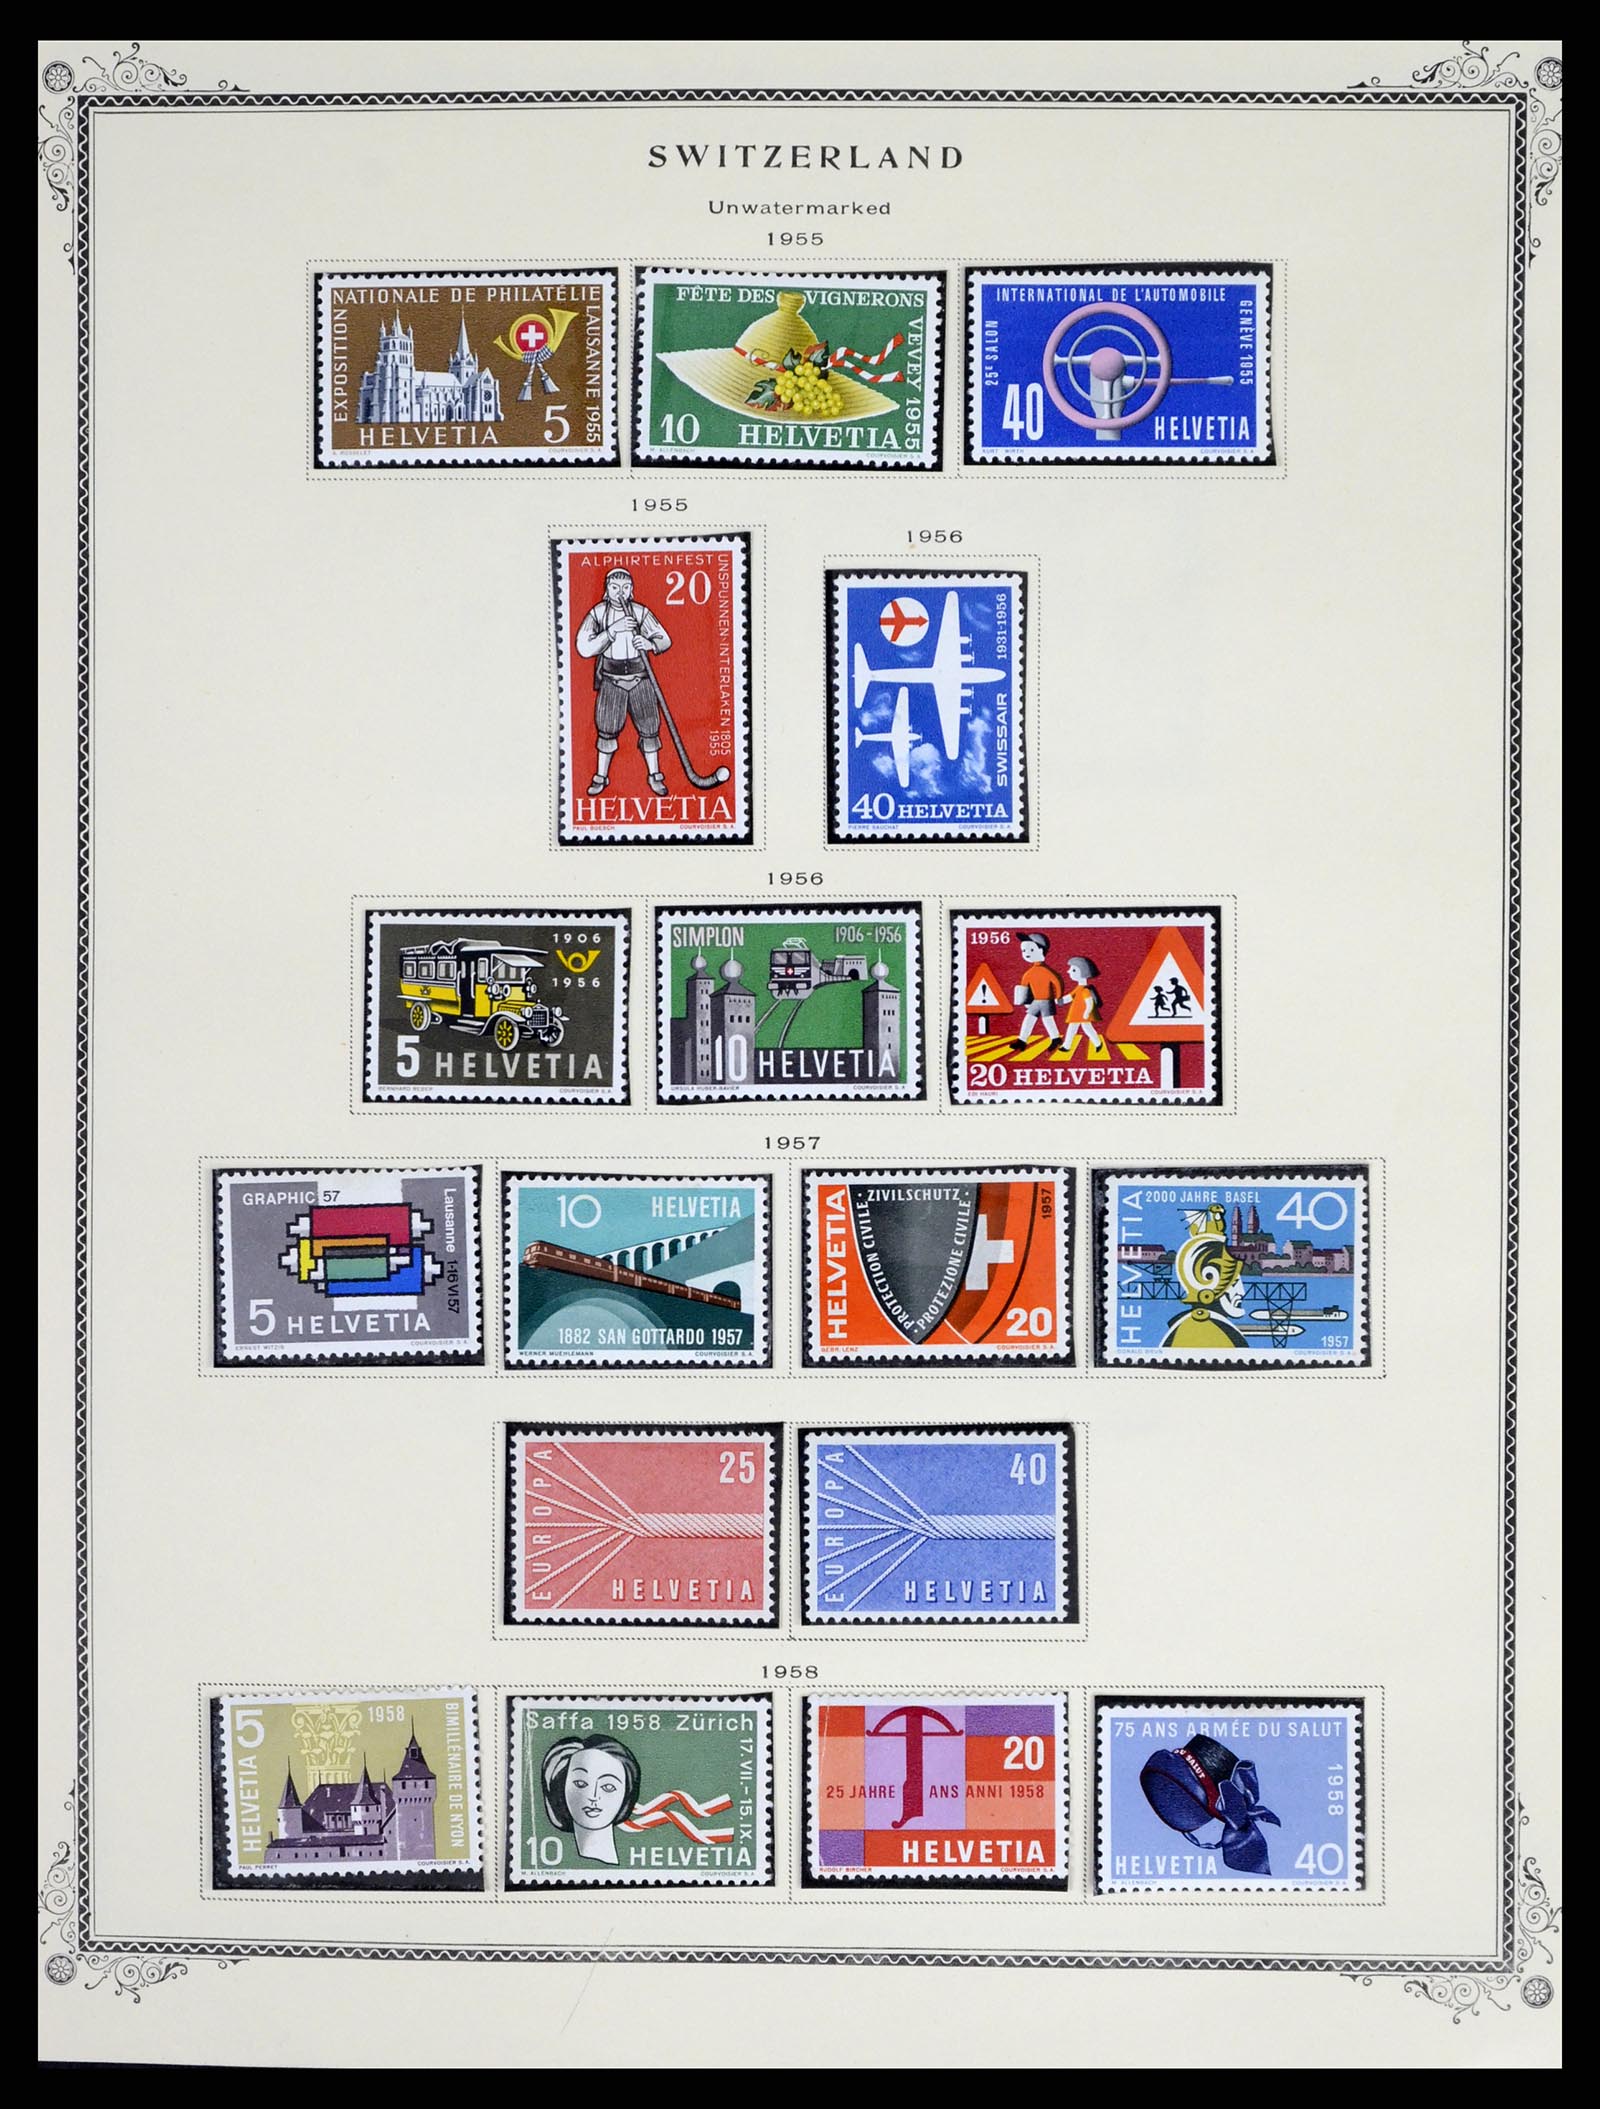 37641 018 - Stamp collection 37641 Switzerland 1855-1984.